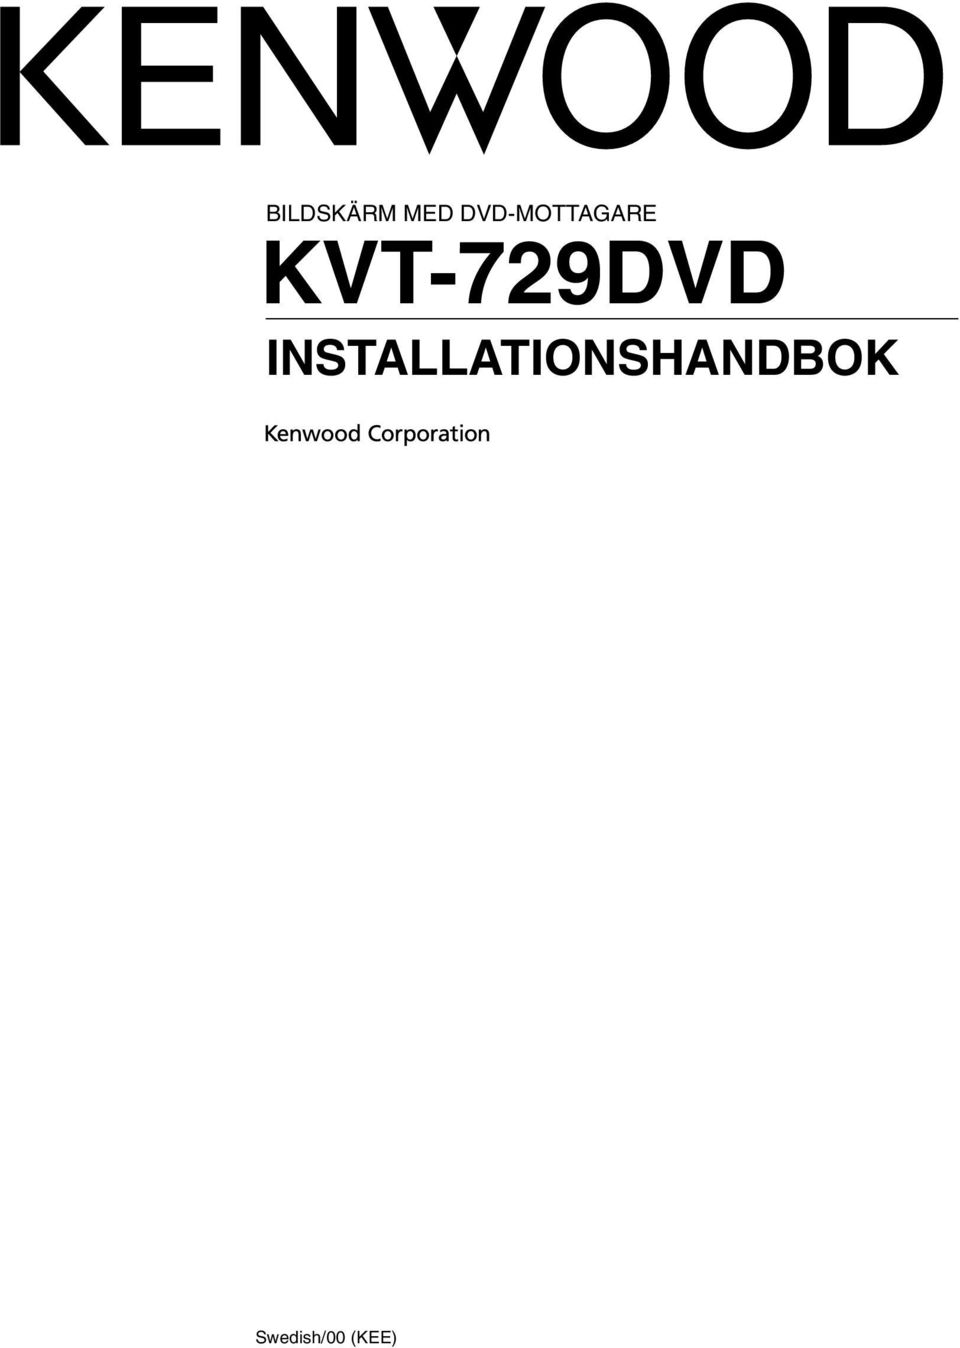 KVT-729DVD